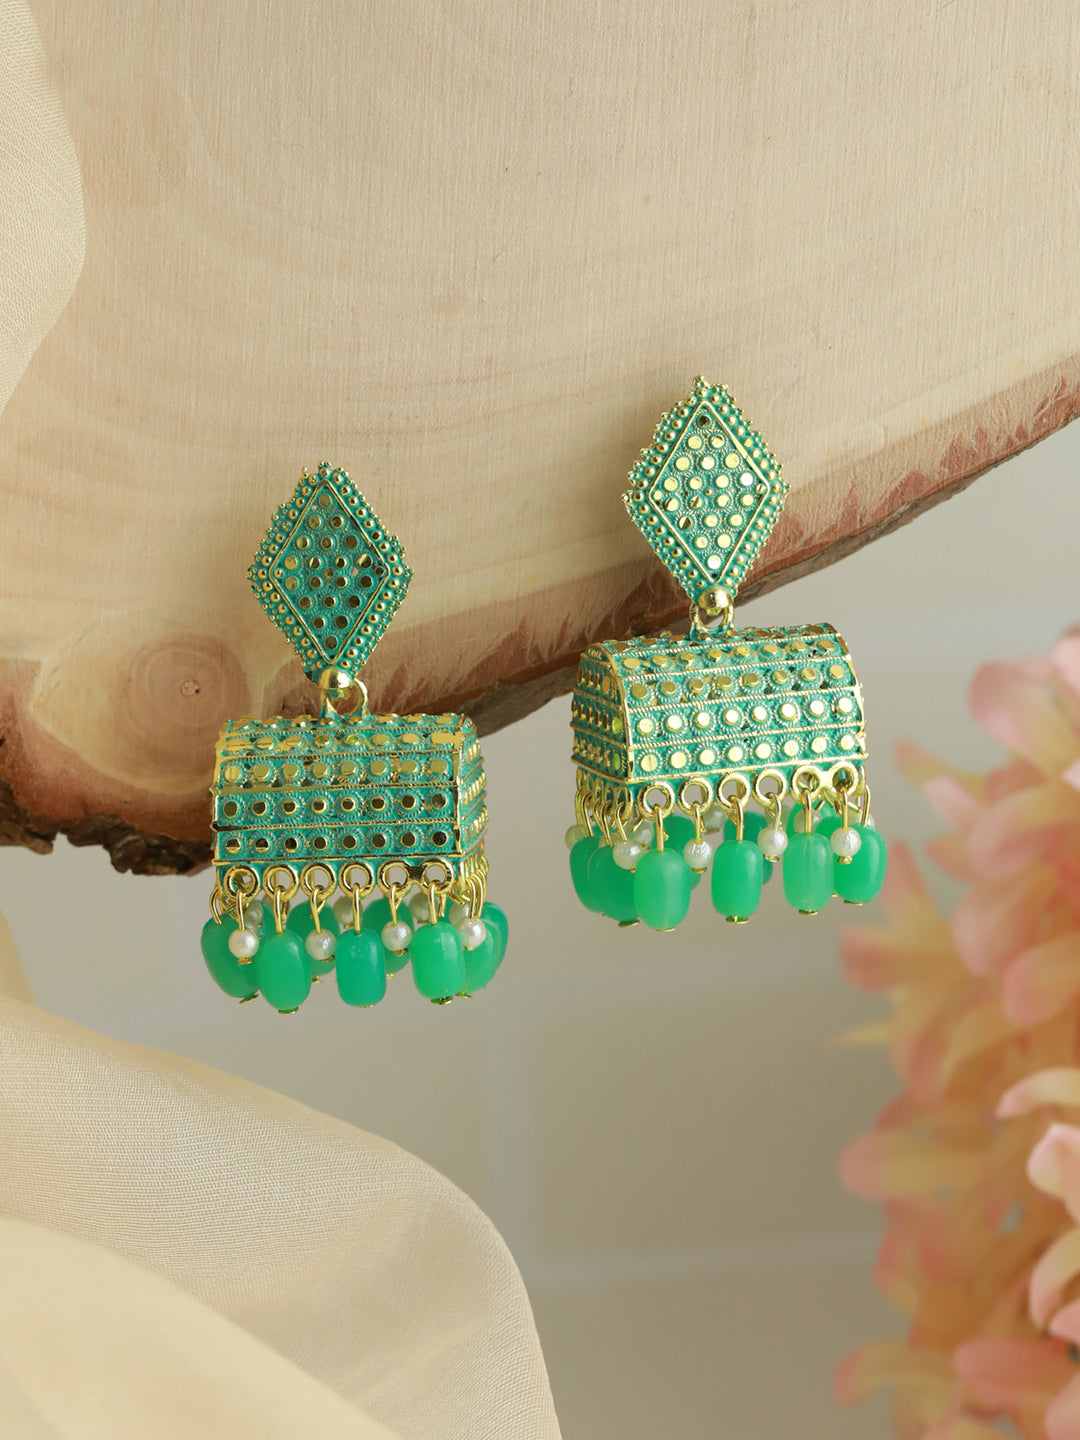 Priyaasi Green Gold Plated Case Jhumka Earrings